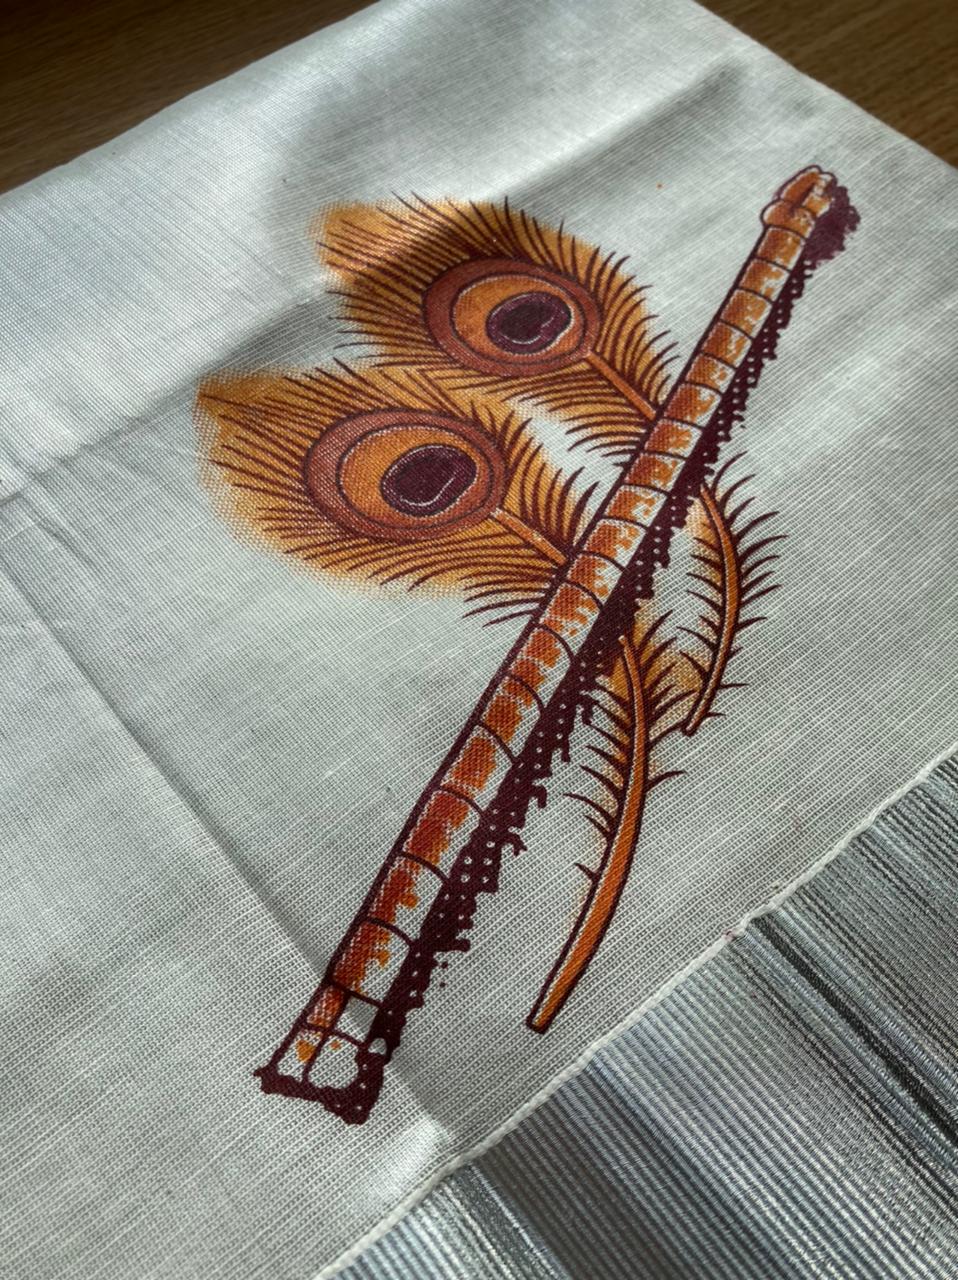 Kerala Silver Tissue Kasavu Onam Saree with Mural Printed Peacock Feather